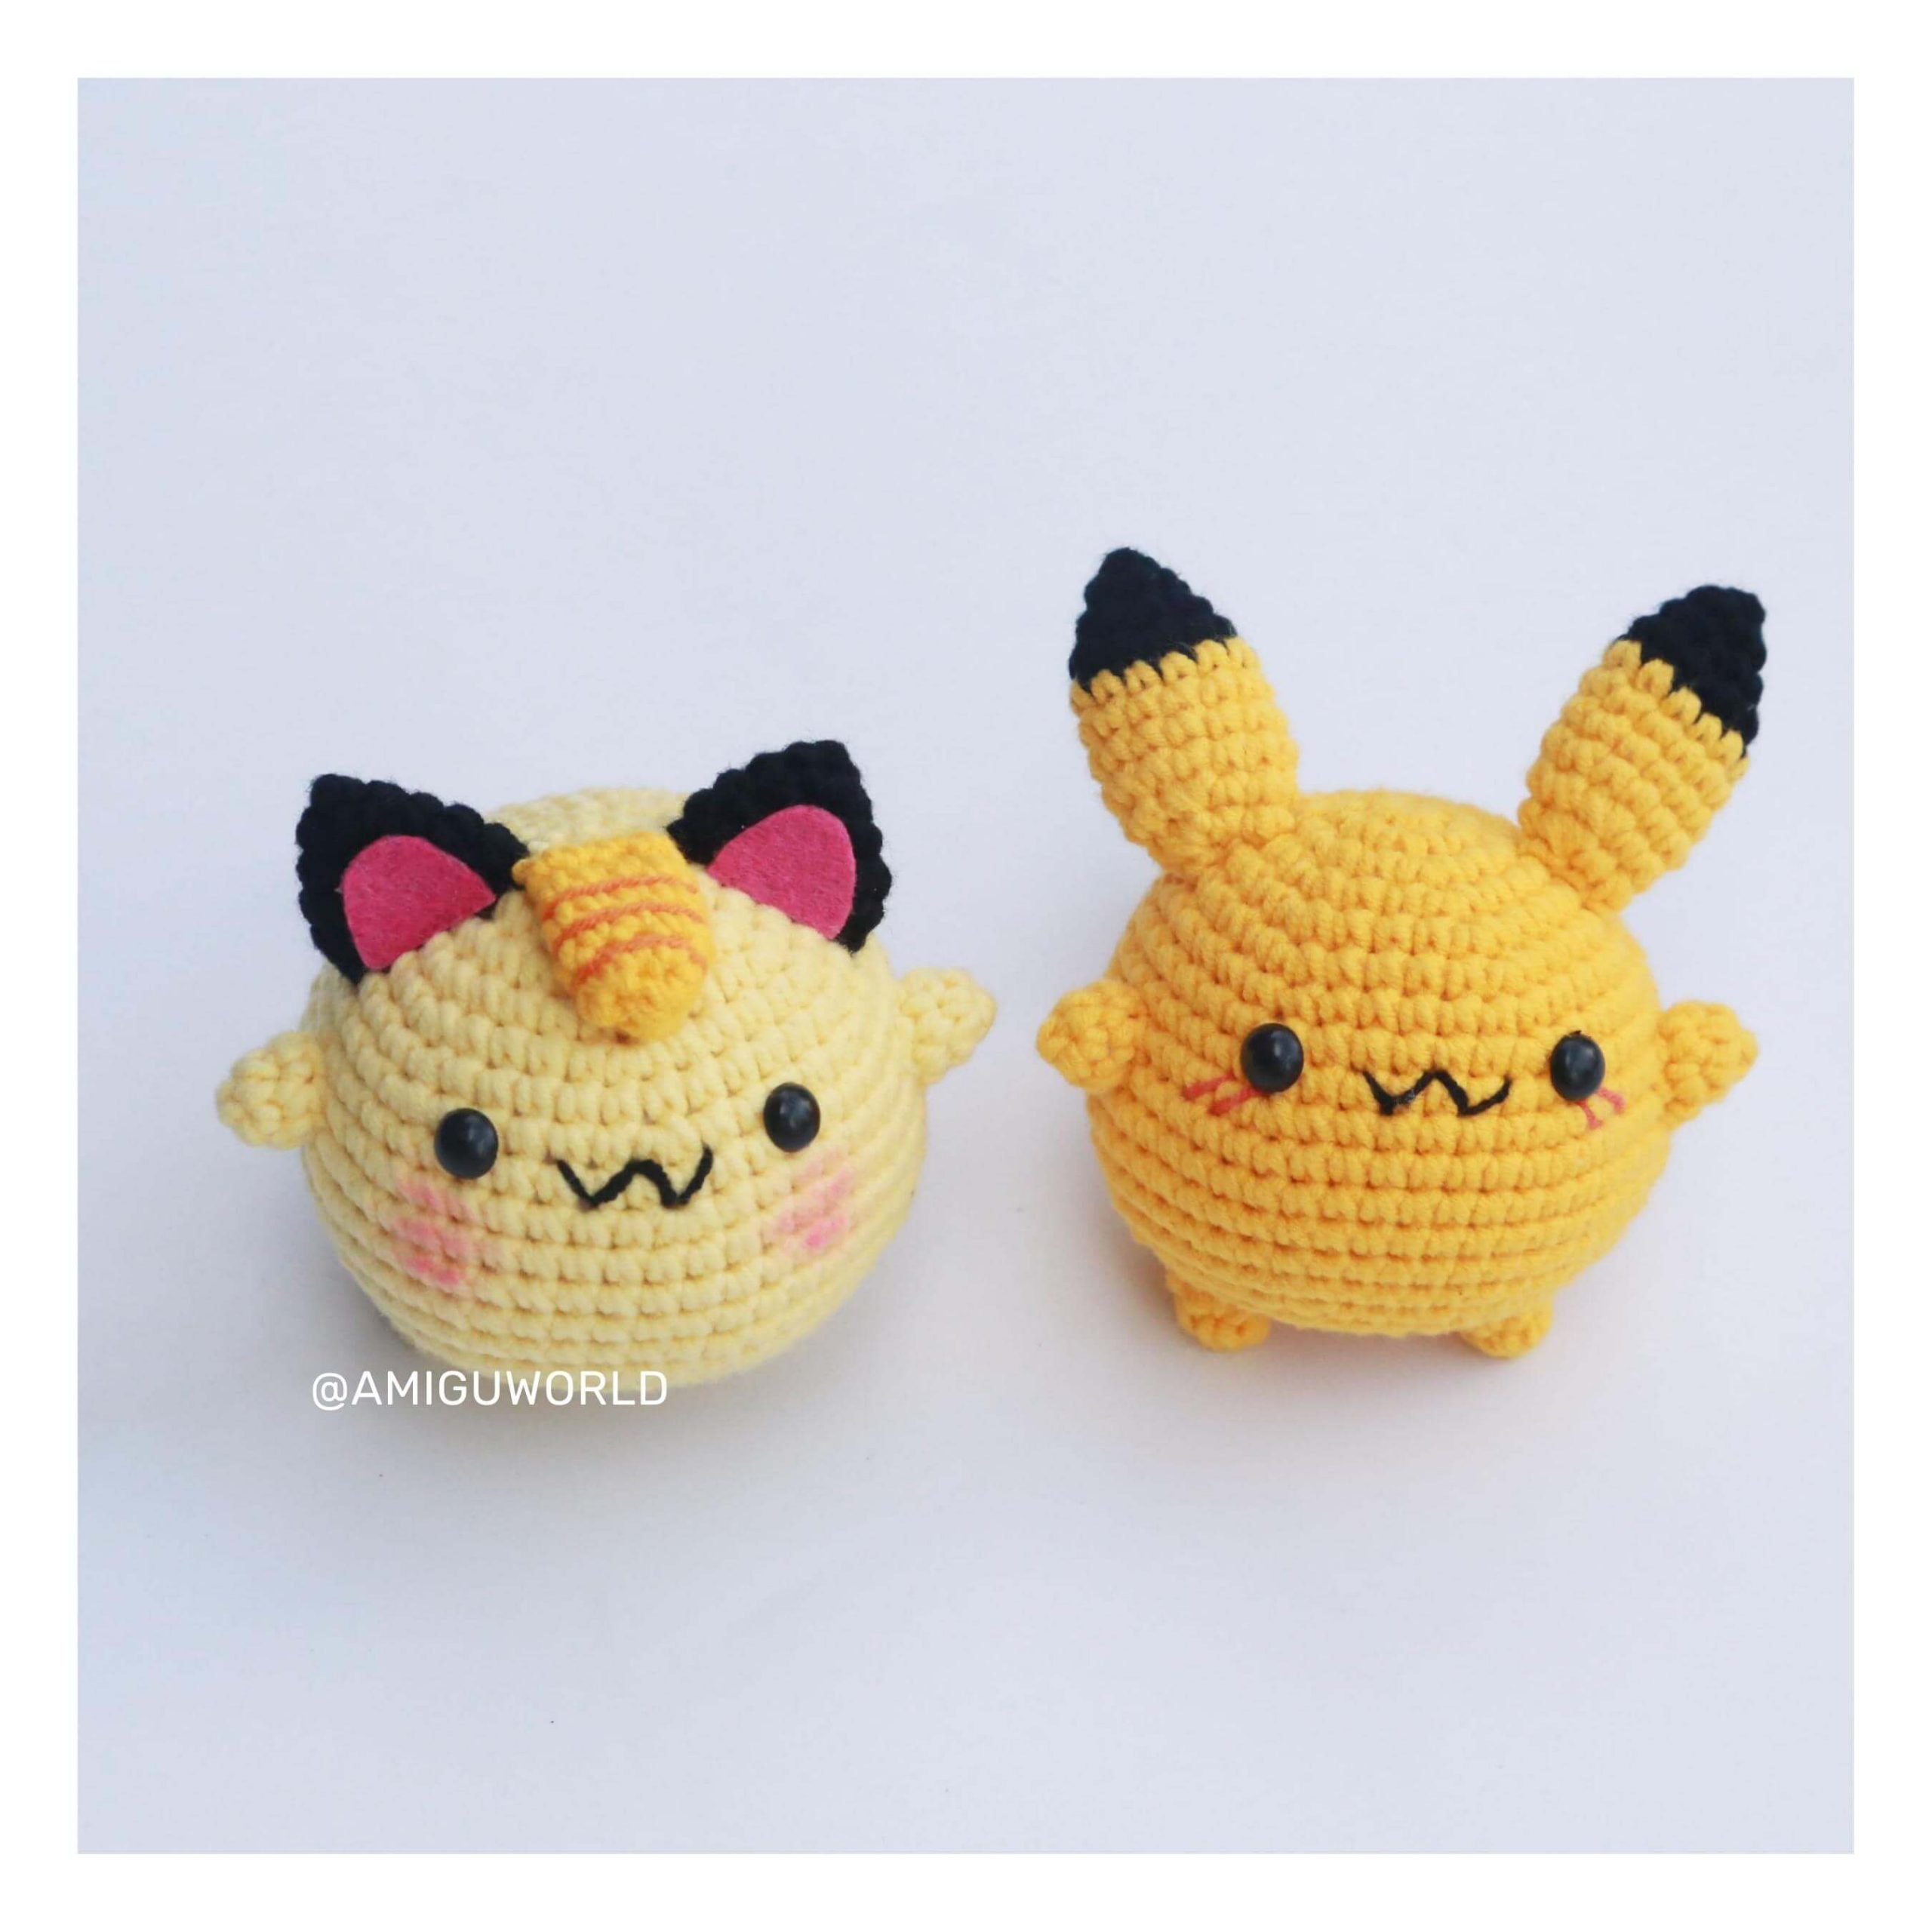 Meowth-amigurumi-crochet-pattern-by-AmiguWorld (6)